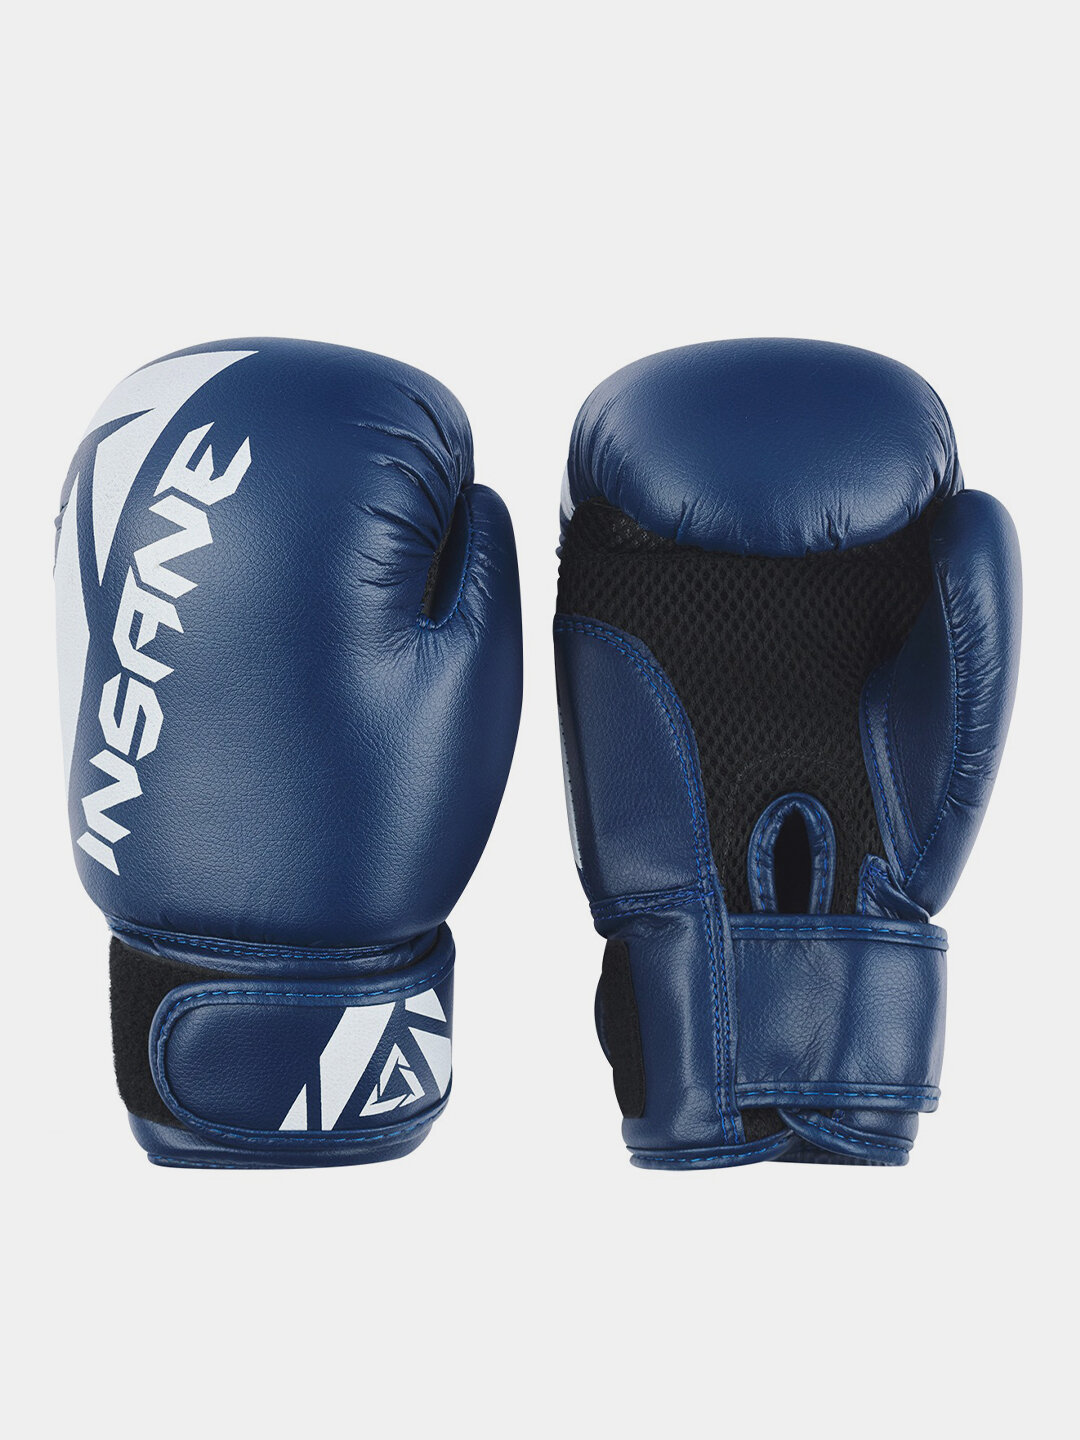 Перчатки боксерские INSANE MARS IN22-BG100, ПУ